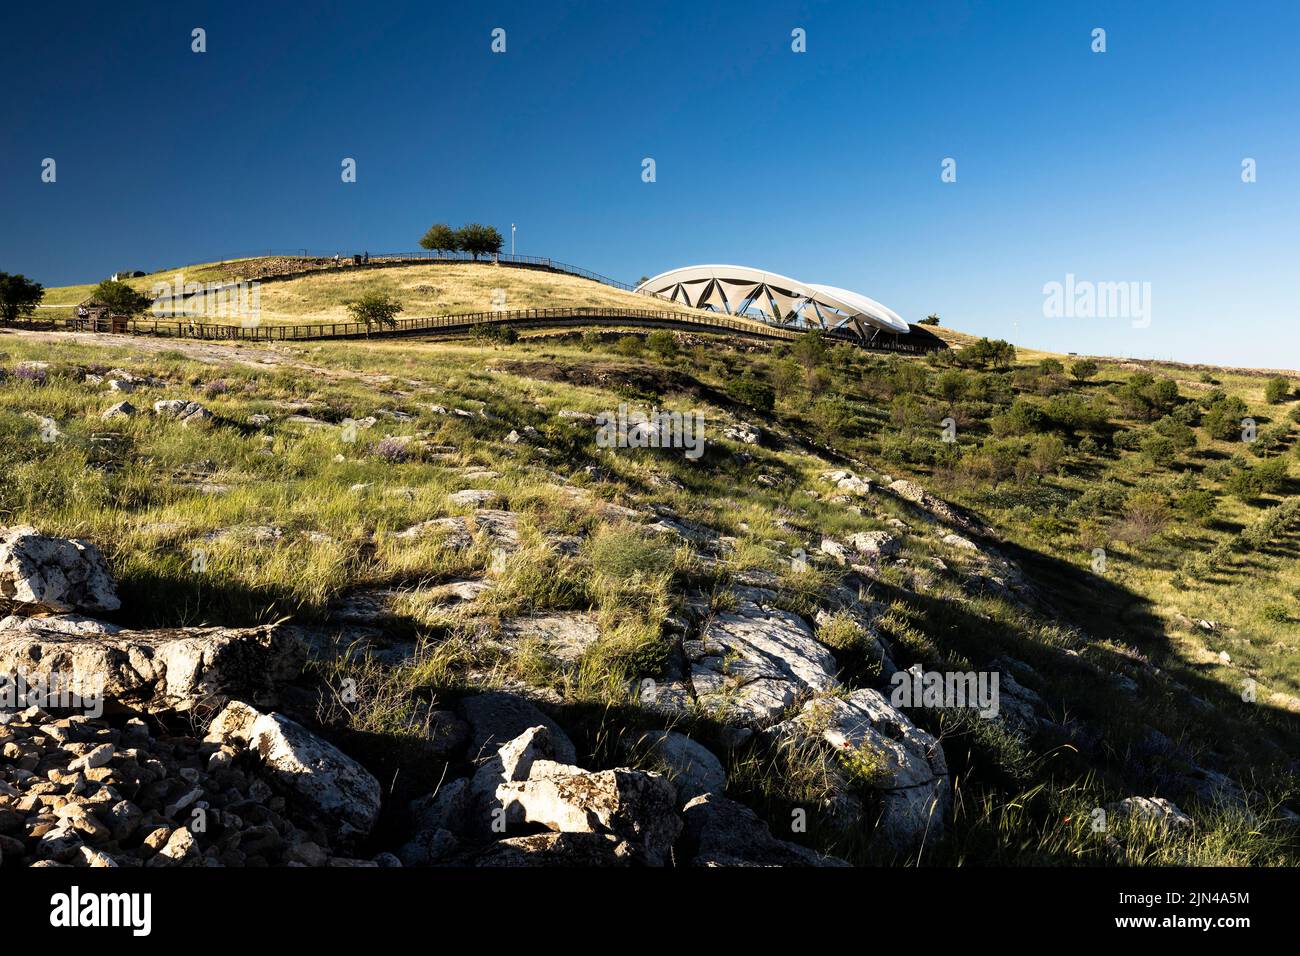 Gobekli tepe (gobeklitepe), el templo más antiguo del mundo, el sitio de la cúpula en la cima de la colina, Sanliurfa (Urfa), provincia de Sanlıurfa, Turquía, Asia Menor, Asia Foto de stock